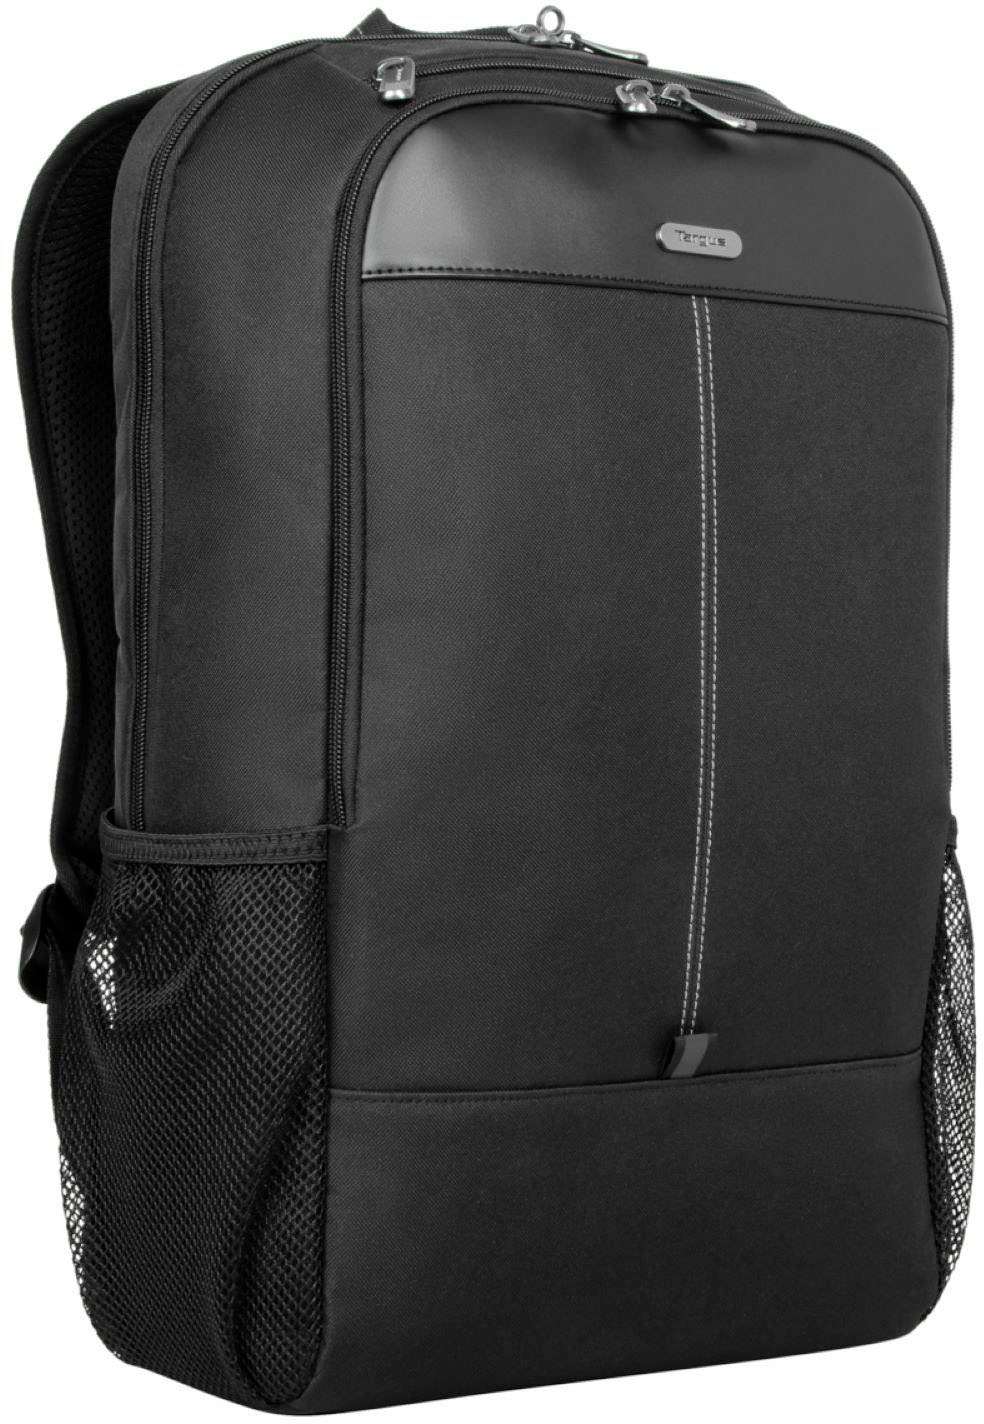 Left View: Samsonite - Mobile Solution Convertible Backpack for 15.6" Laptop - Black